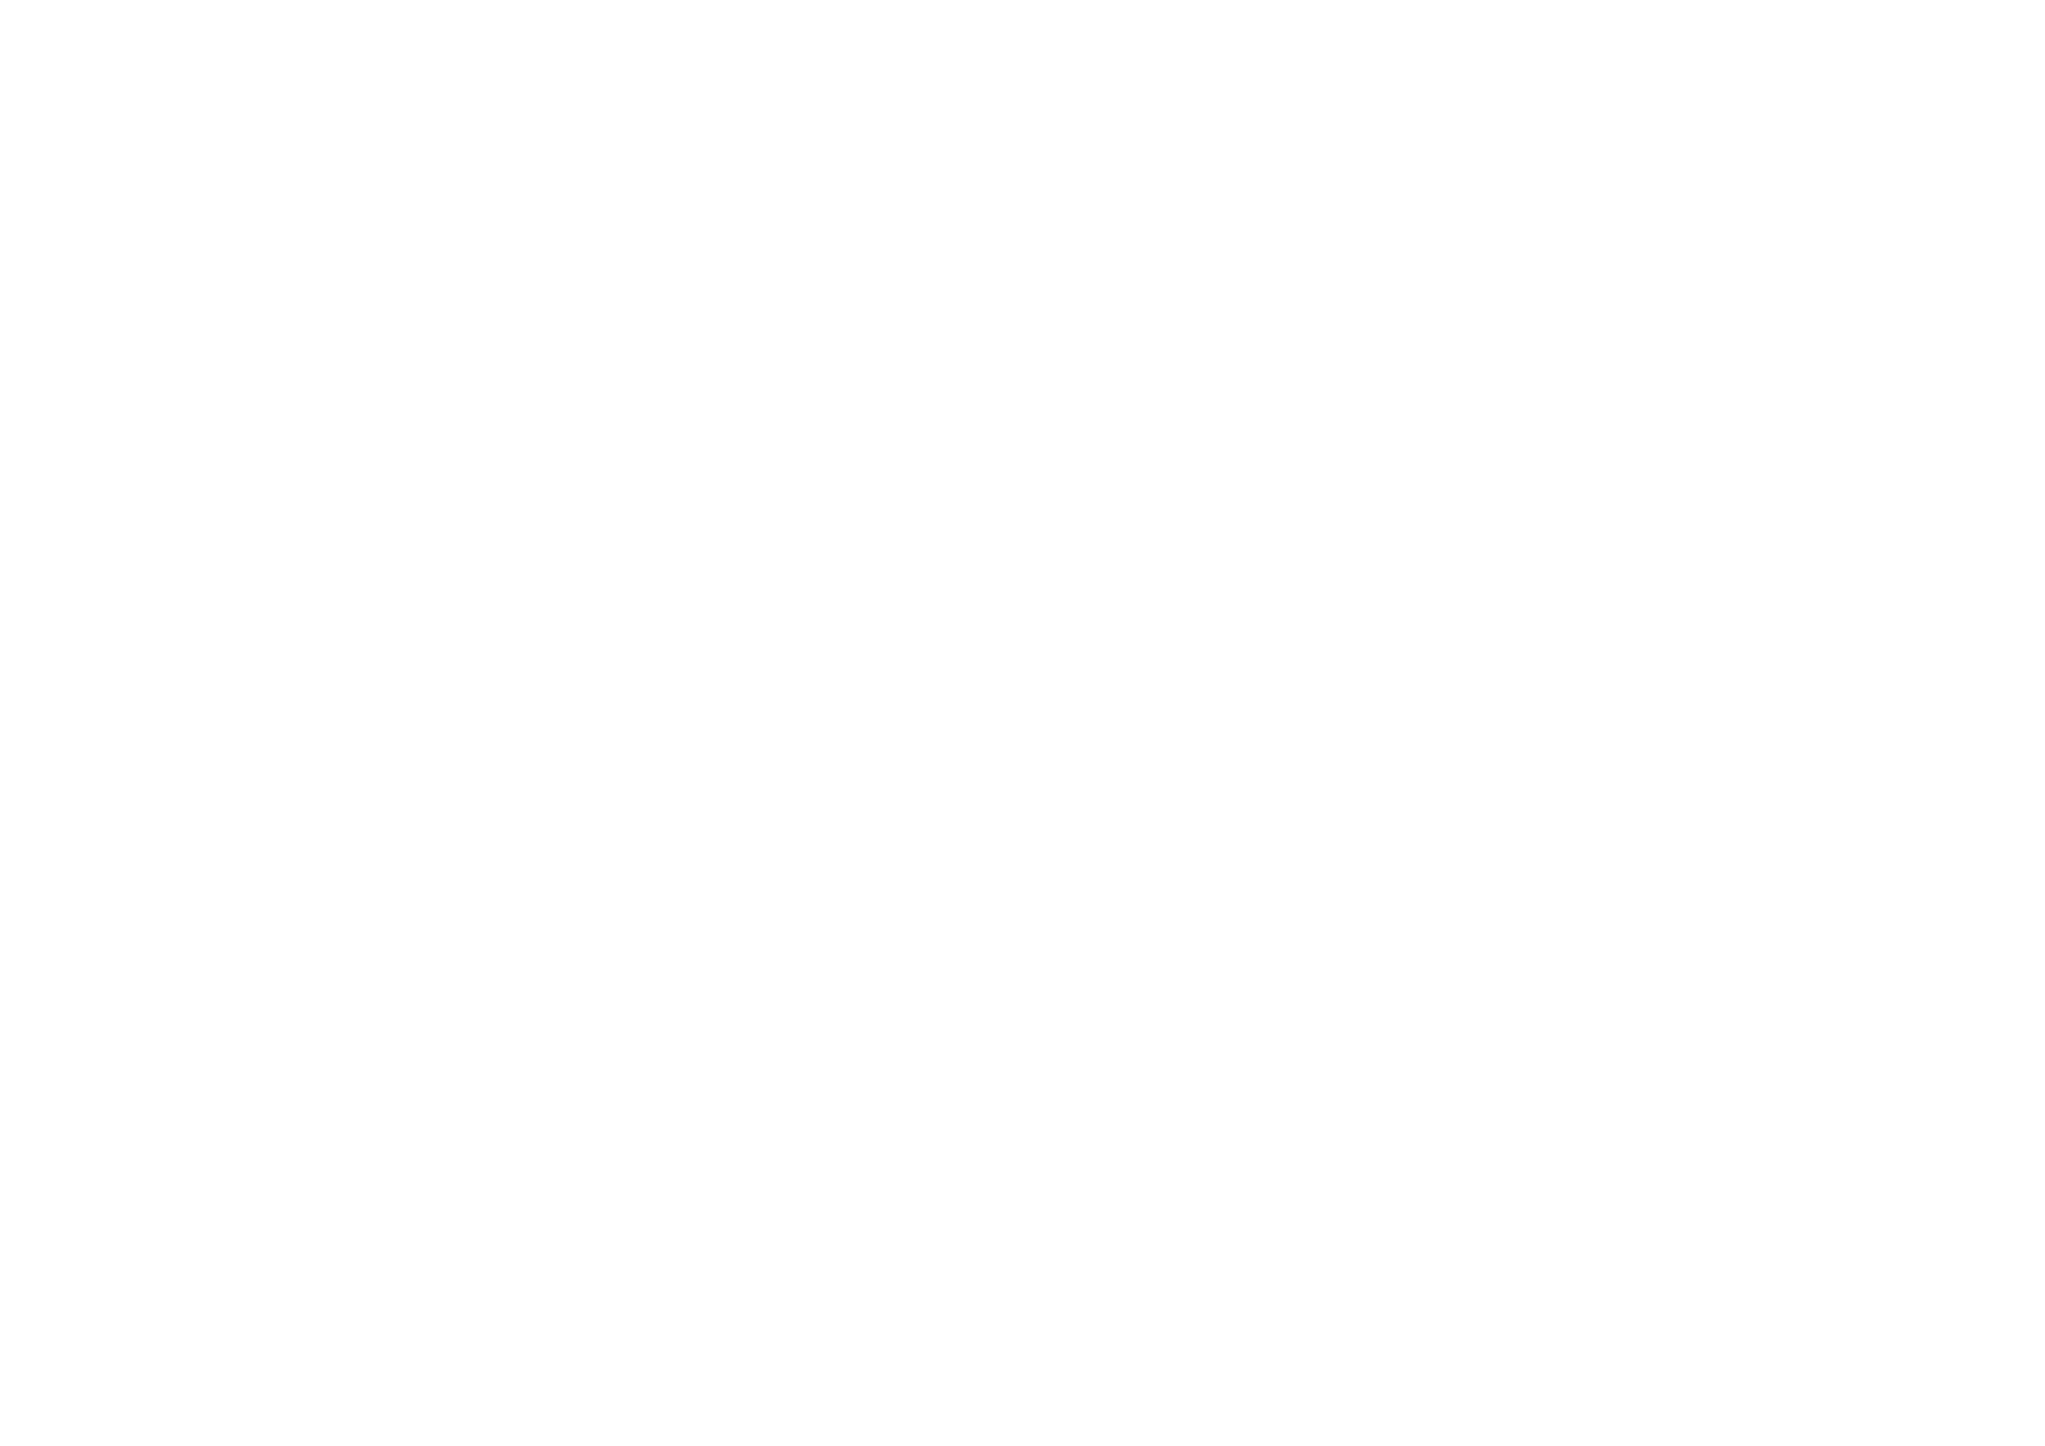 DEUTSCHE BANK